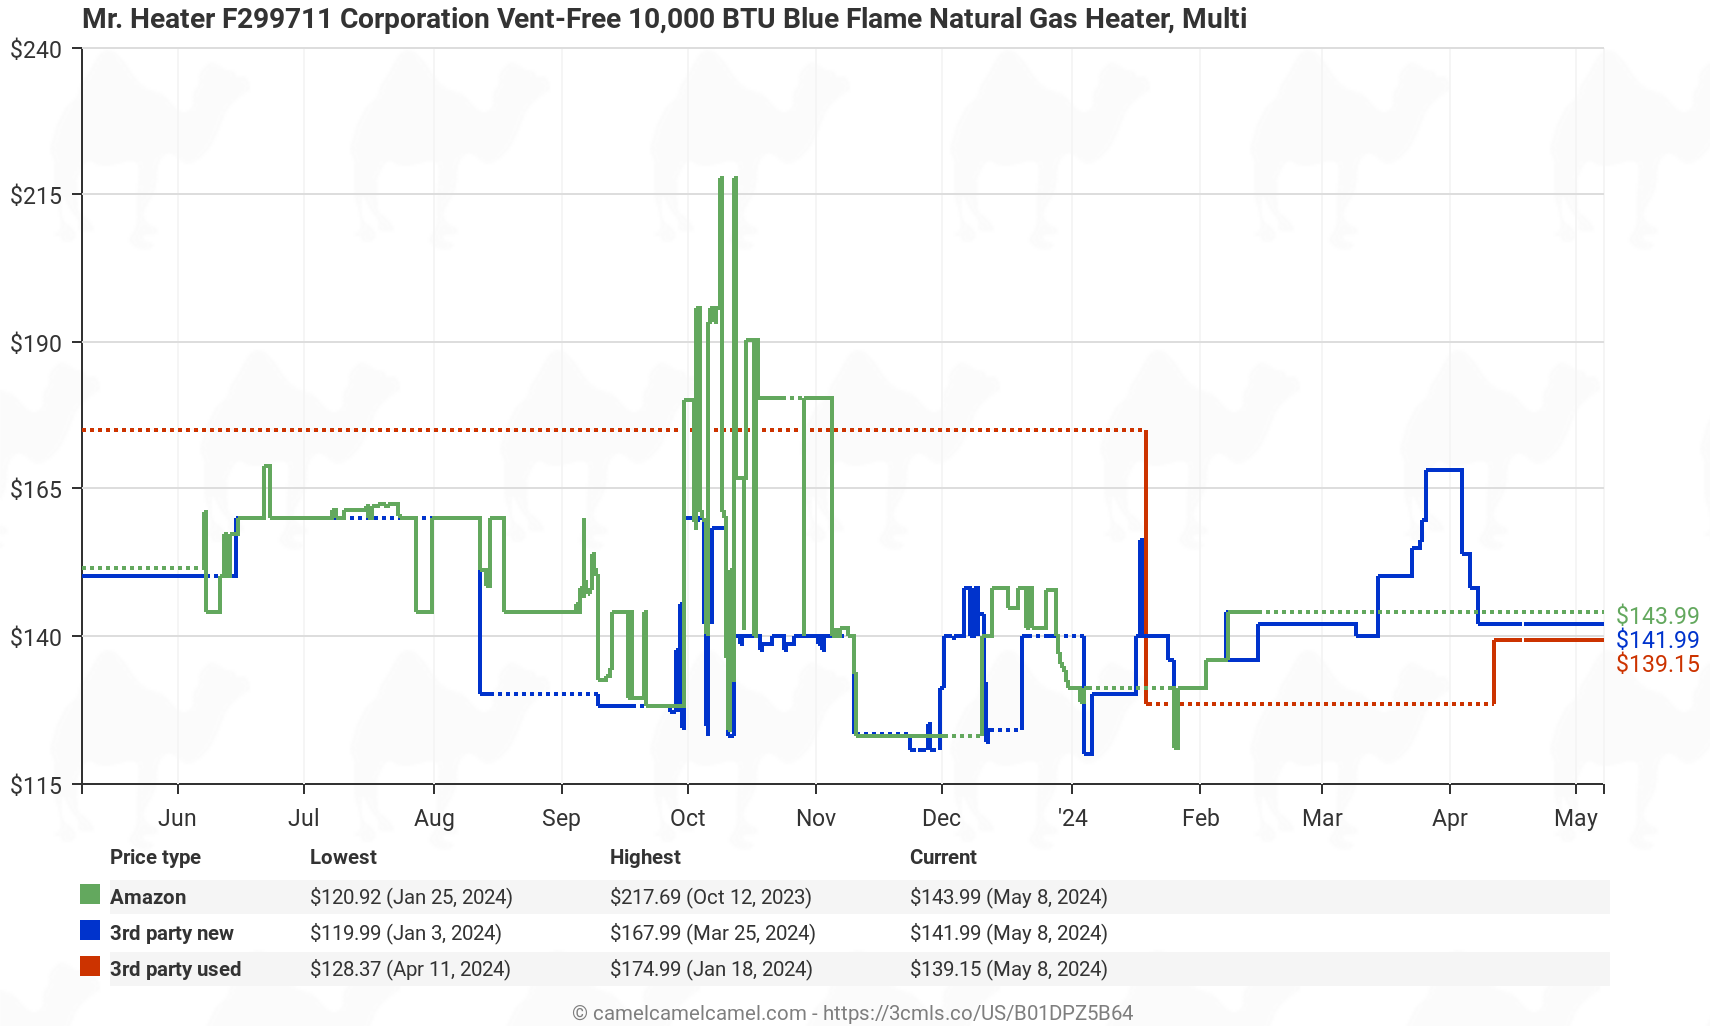 Mr. Heater F299711 Corporation Vent-Free 10,000 BTU Blue Flame Natural Gas Heater, Multi - Price History: B01DPZ5B64